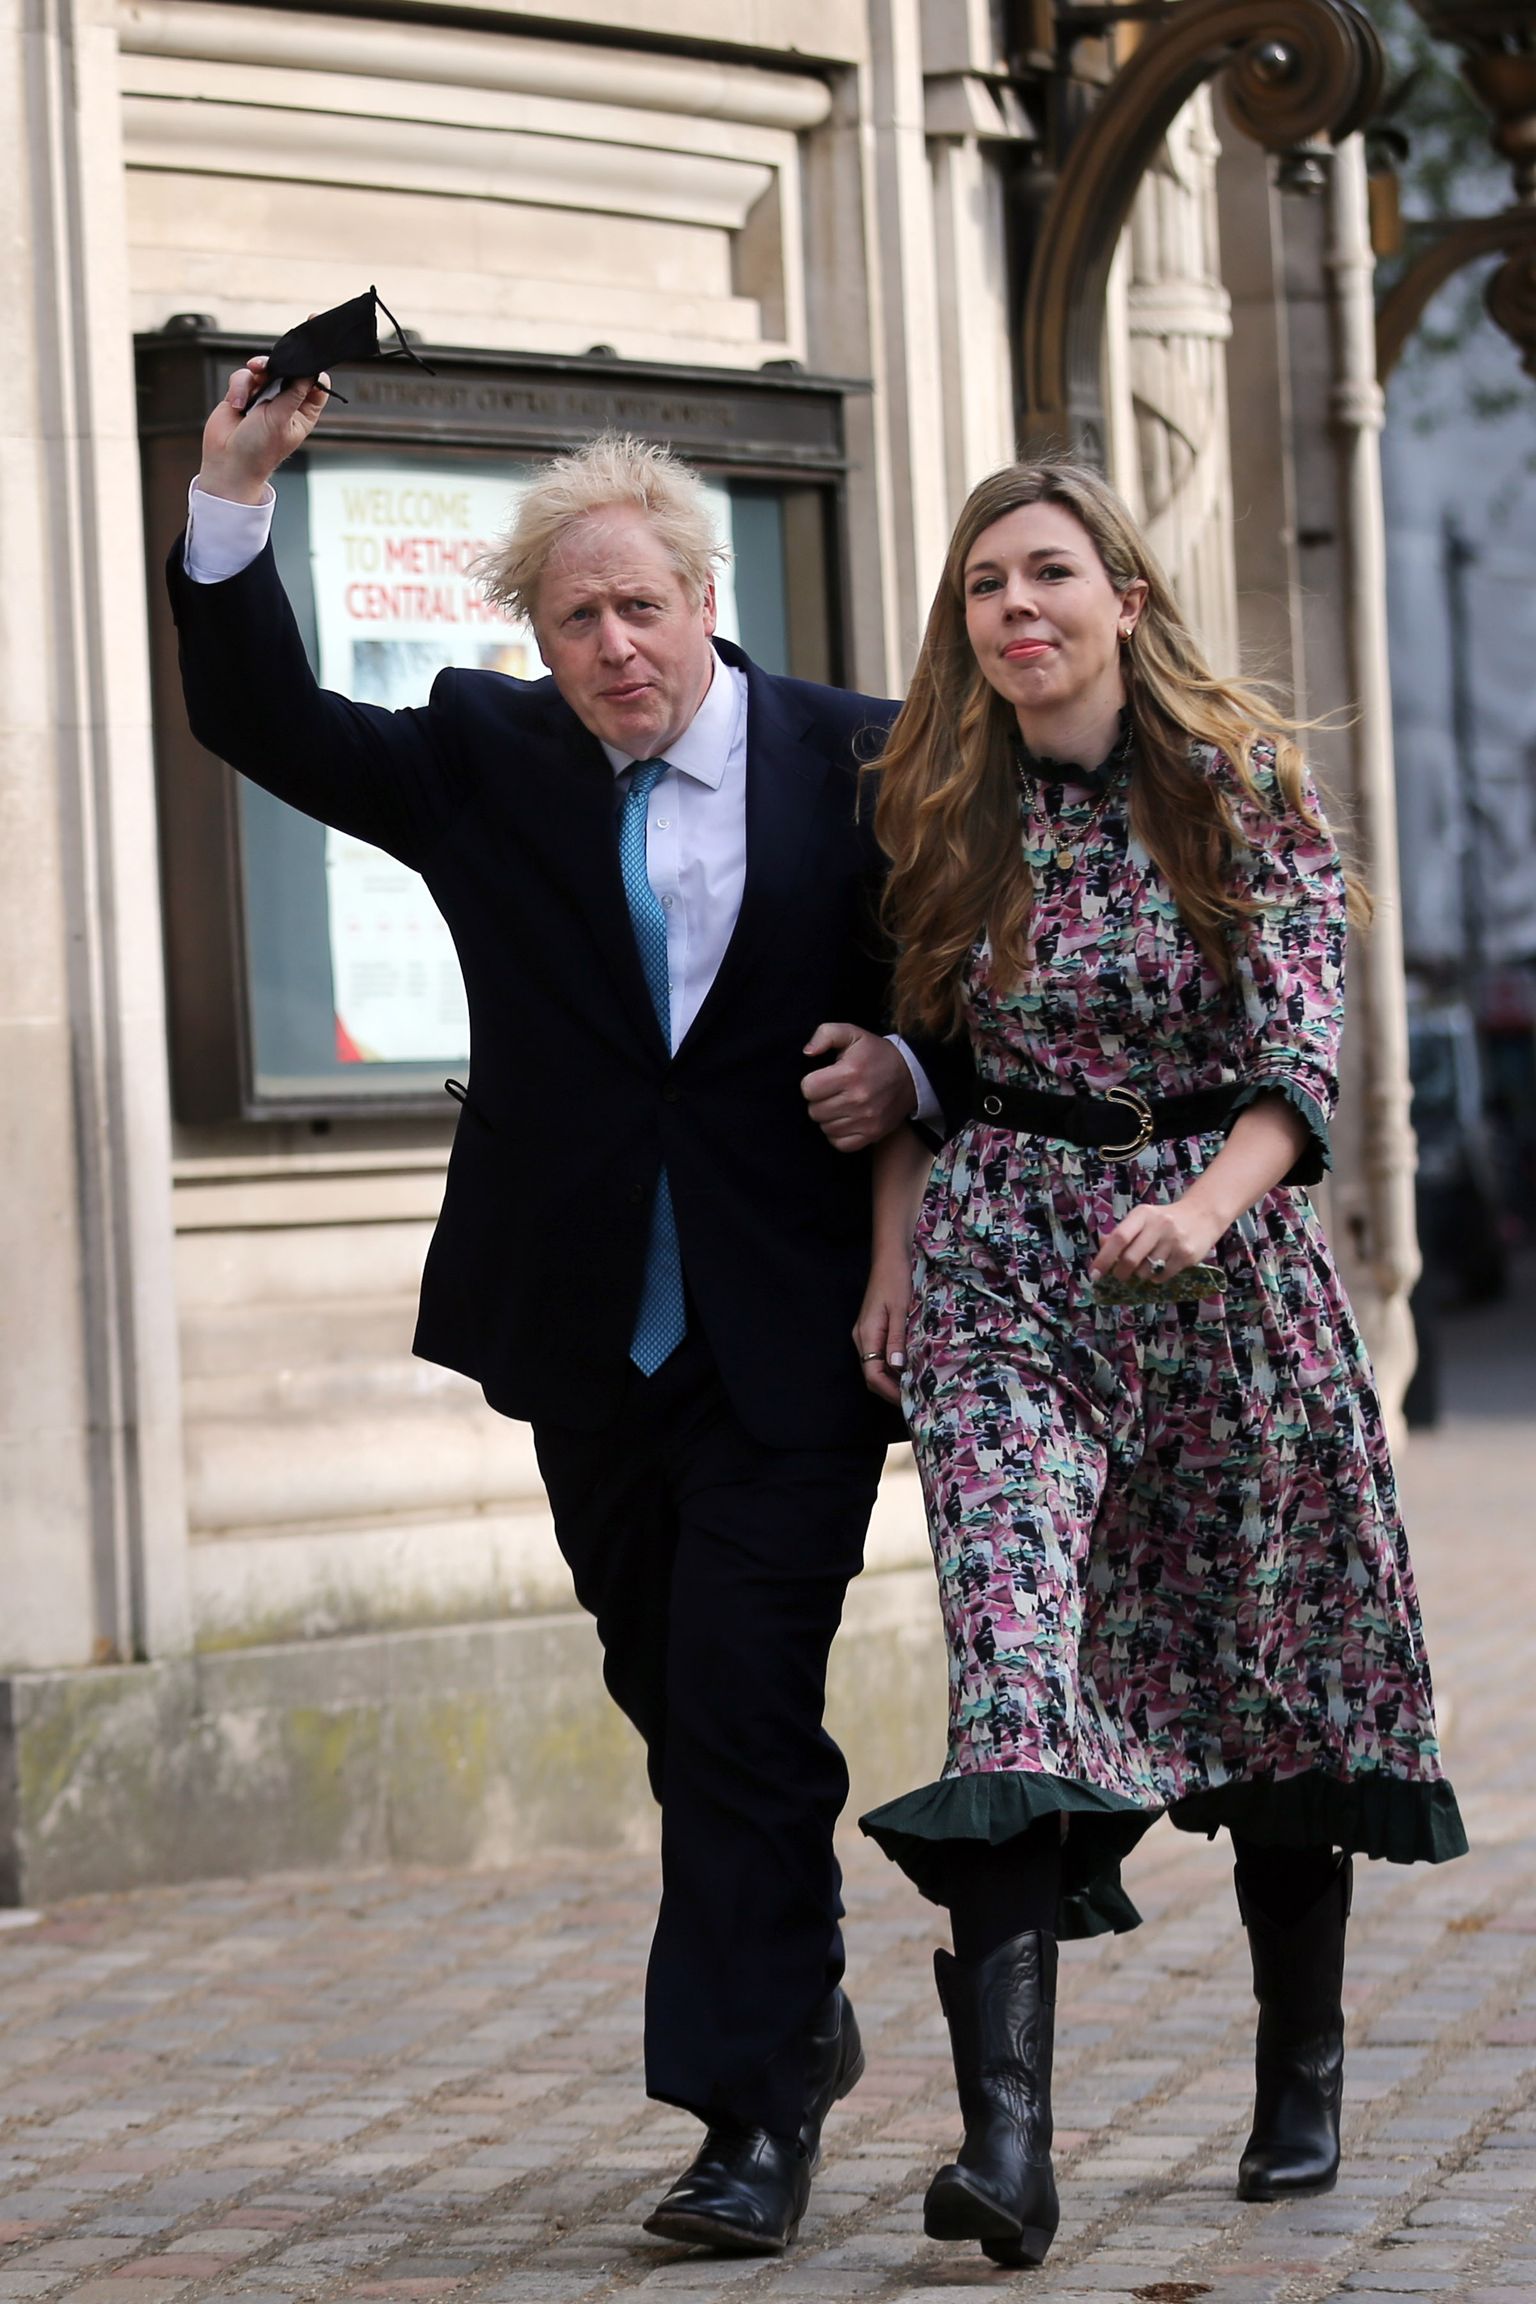 Briti peaminister Boris Johnson ja tema tulevane abikaasa Carrie Symonds Londonis 6. mai 2021.